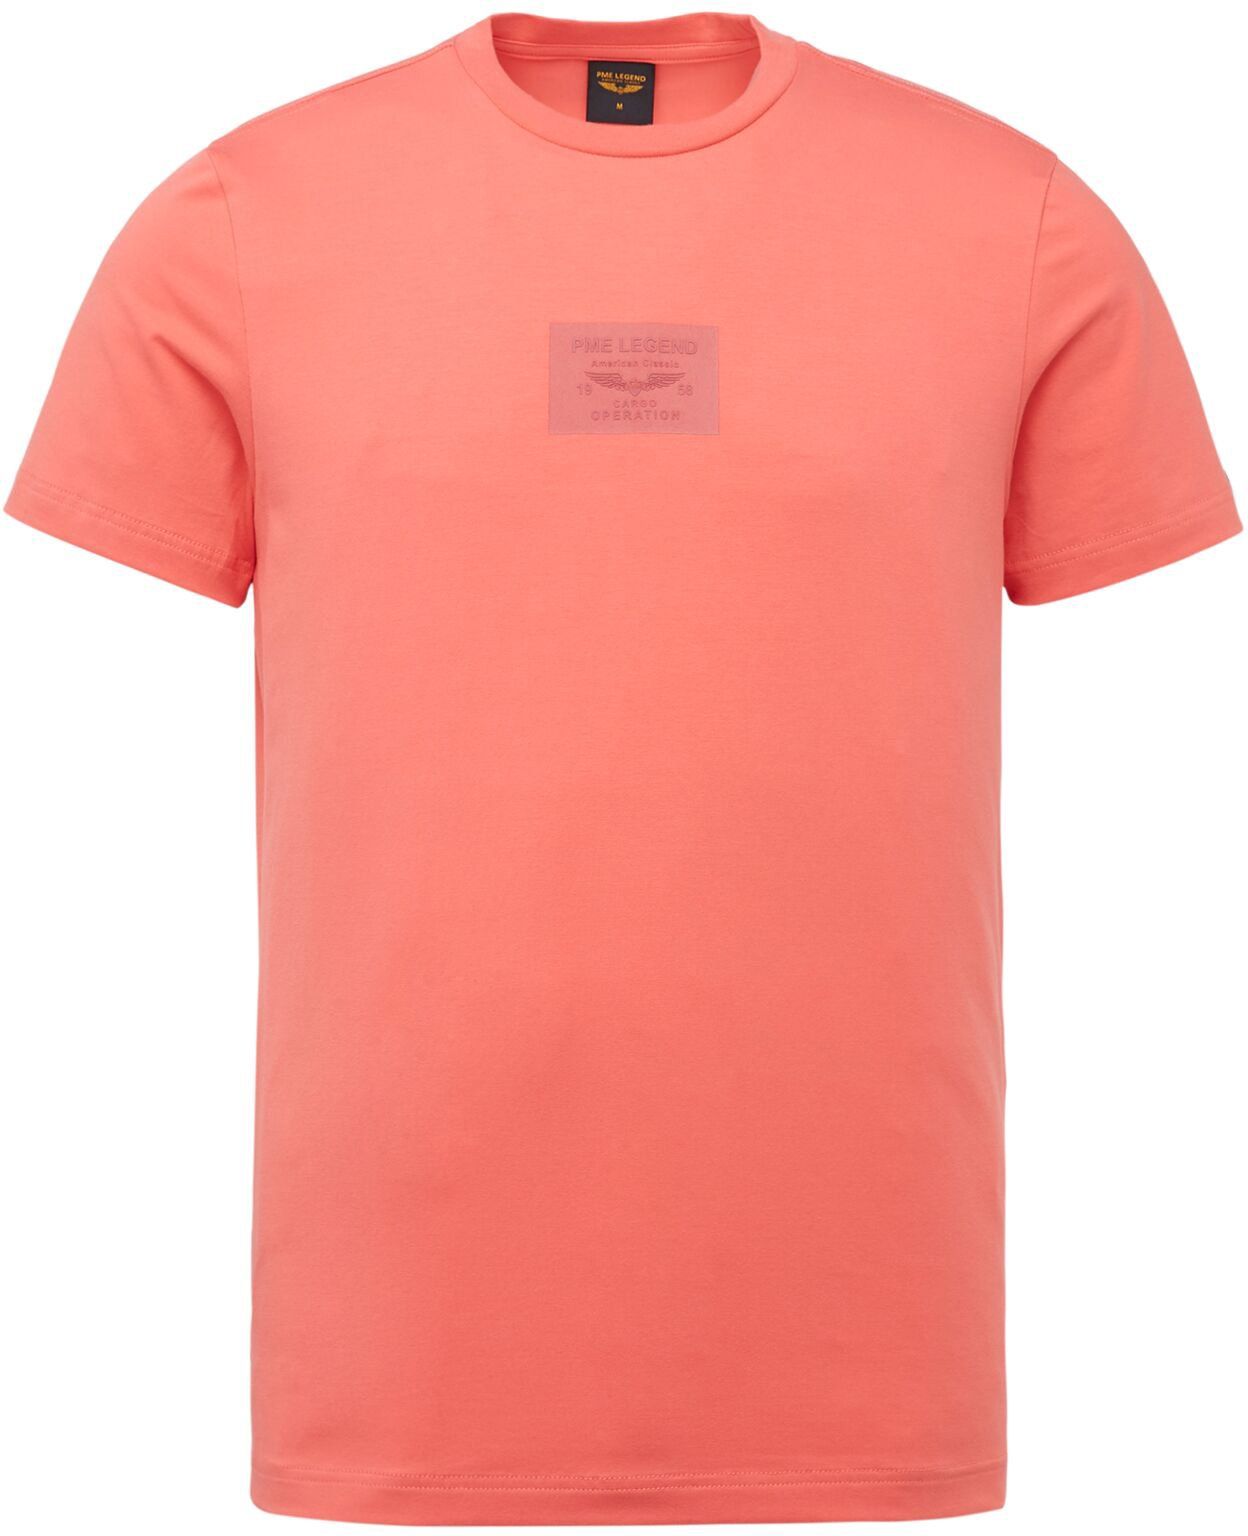 PME Legend T Shirt Logo Red Pink size L